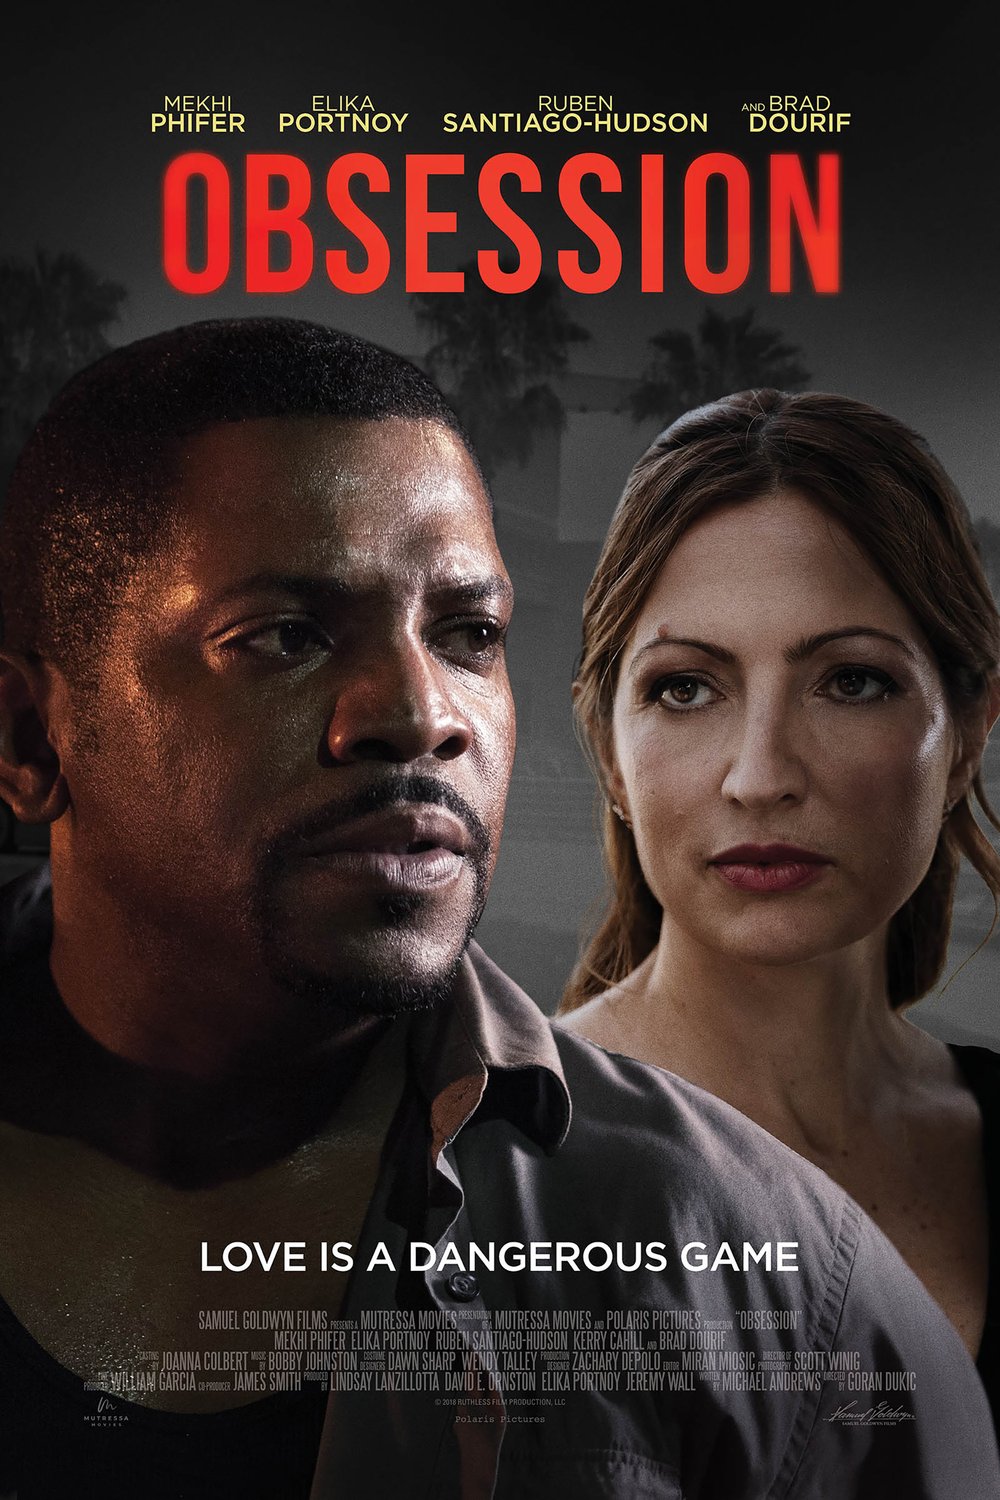 L'affiche du film Obsession